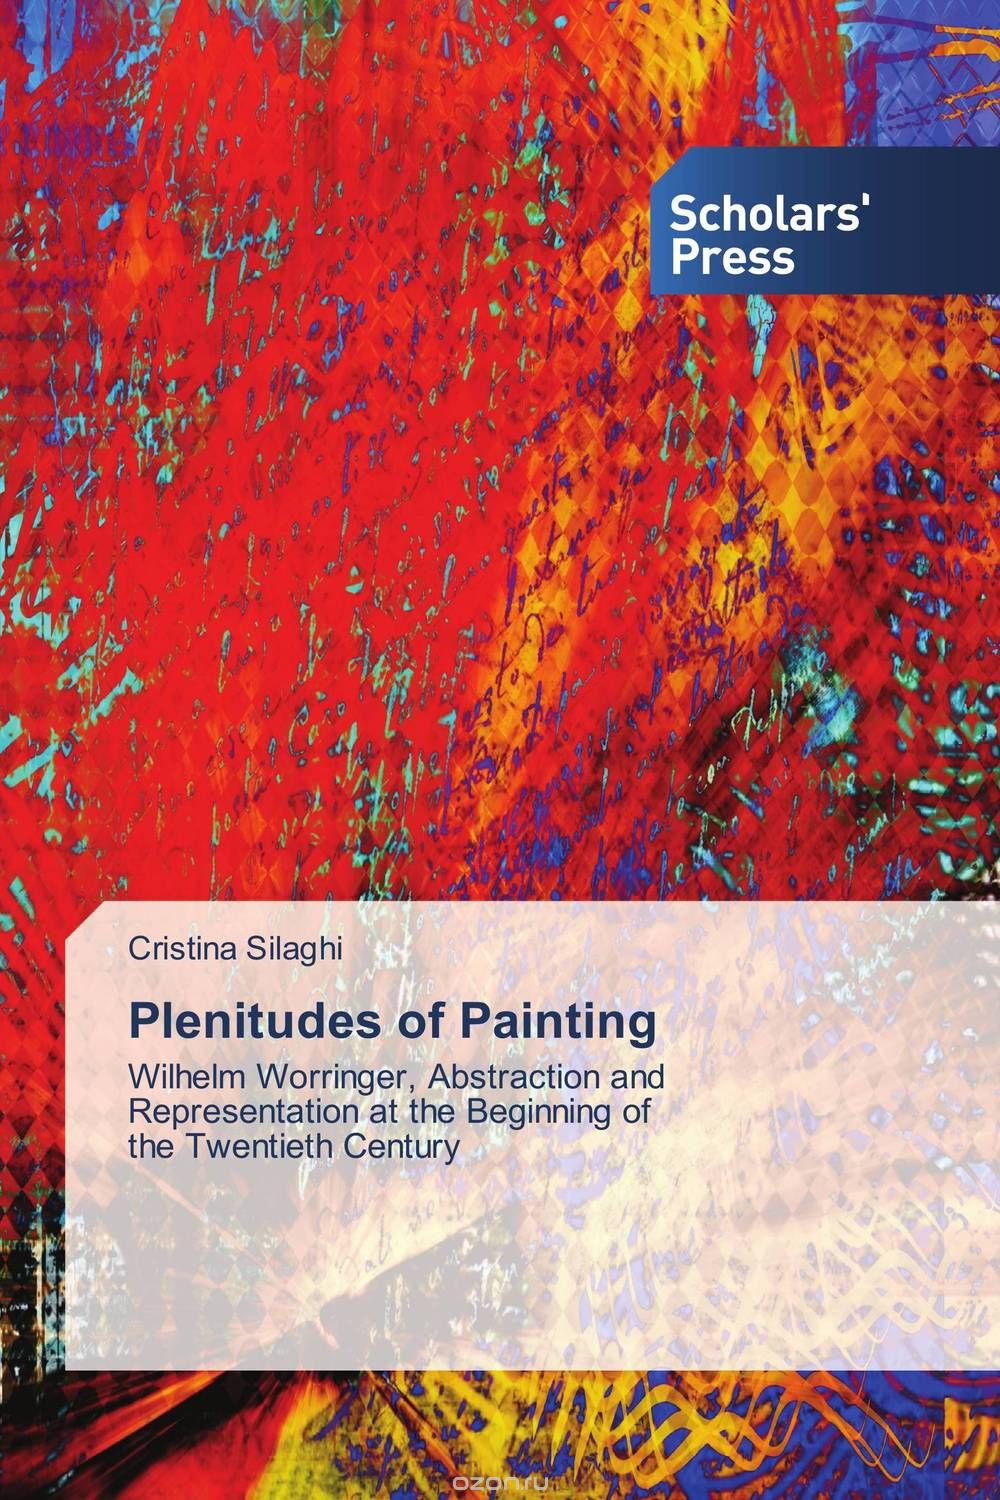 Скачать книгу "Plenitudes of Painting"